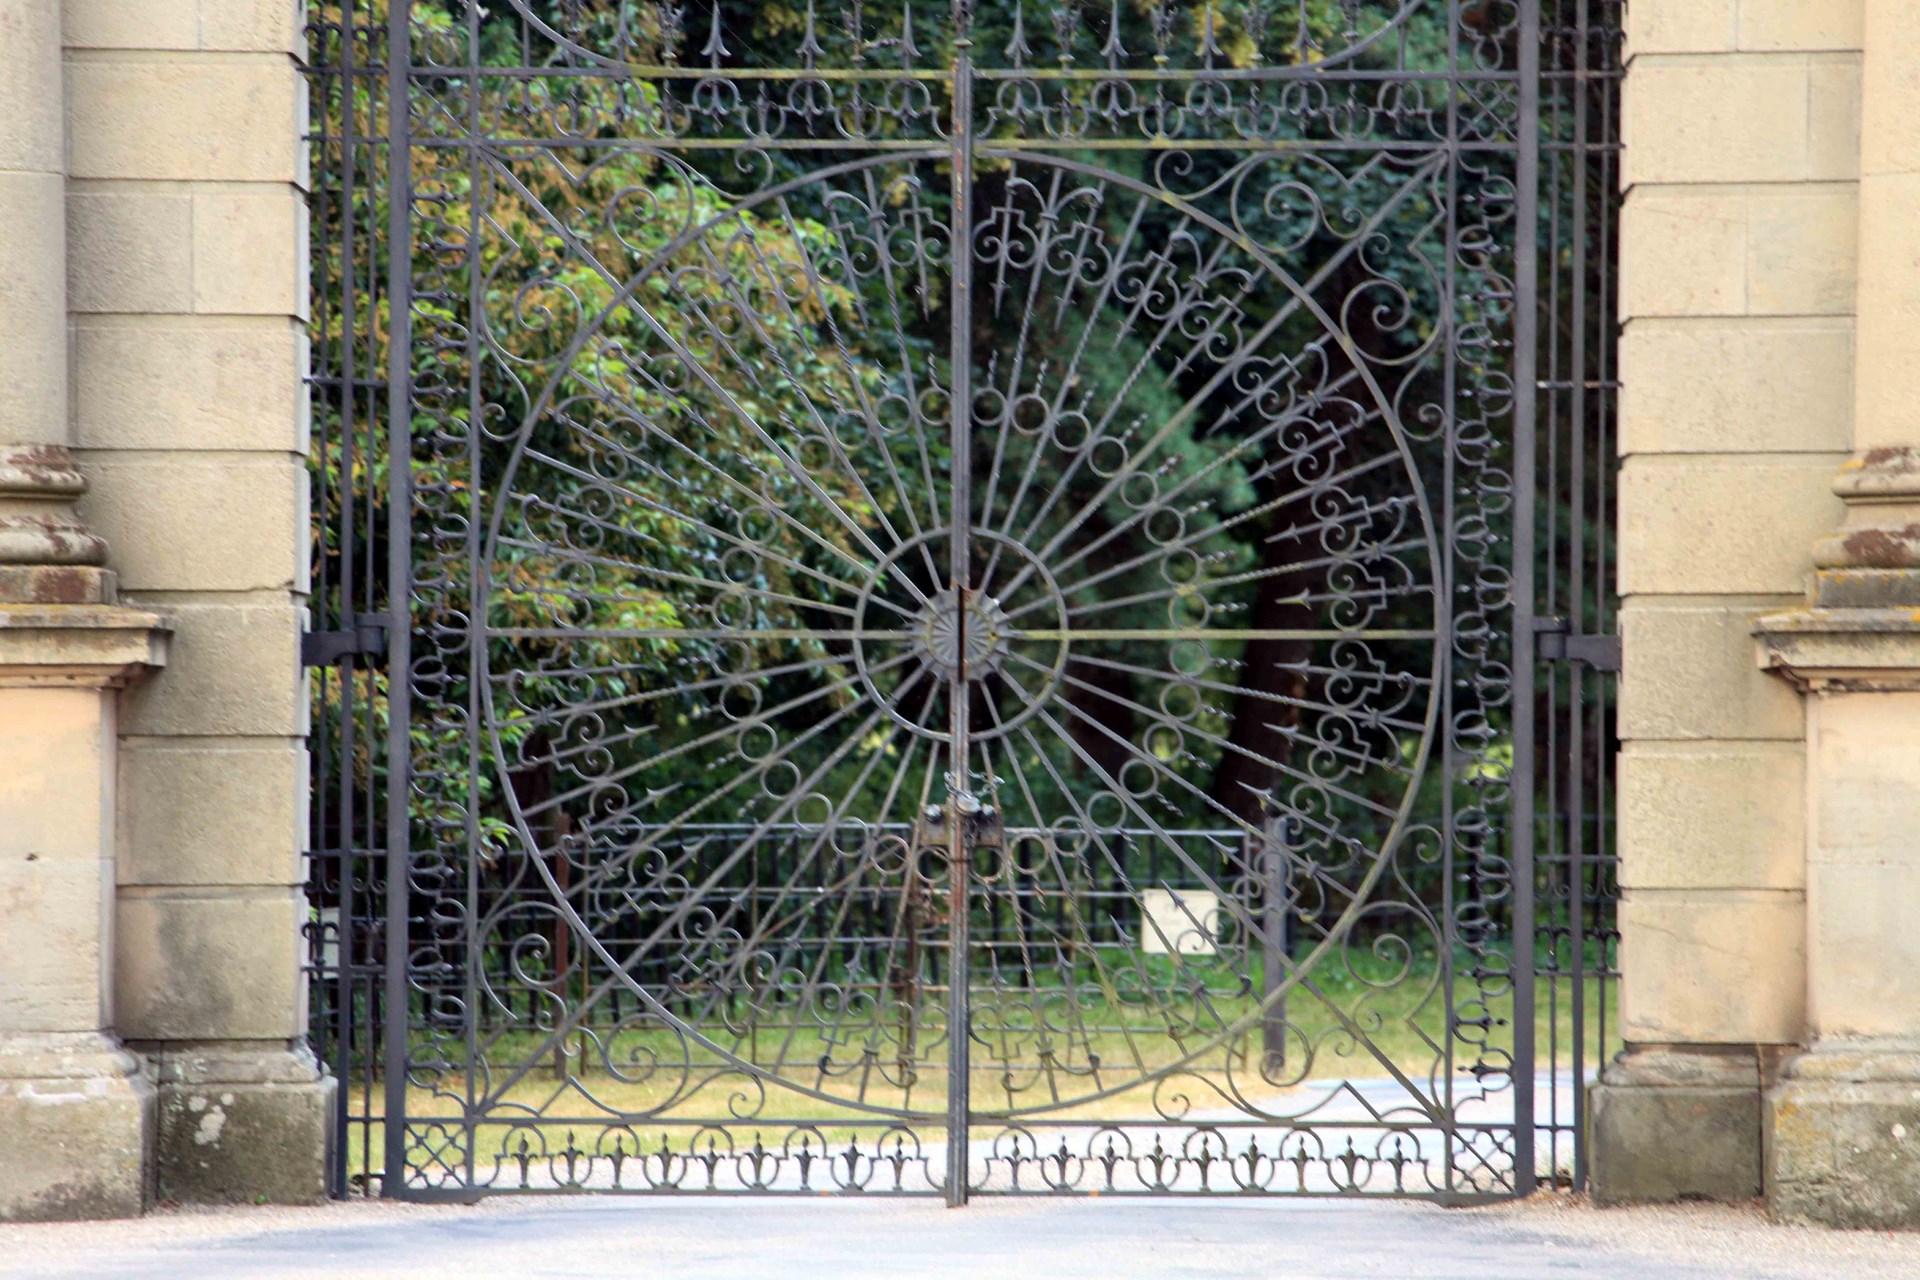 Gates to Attingham Park